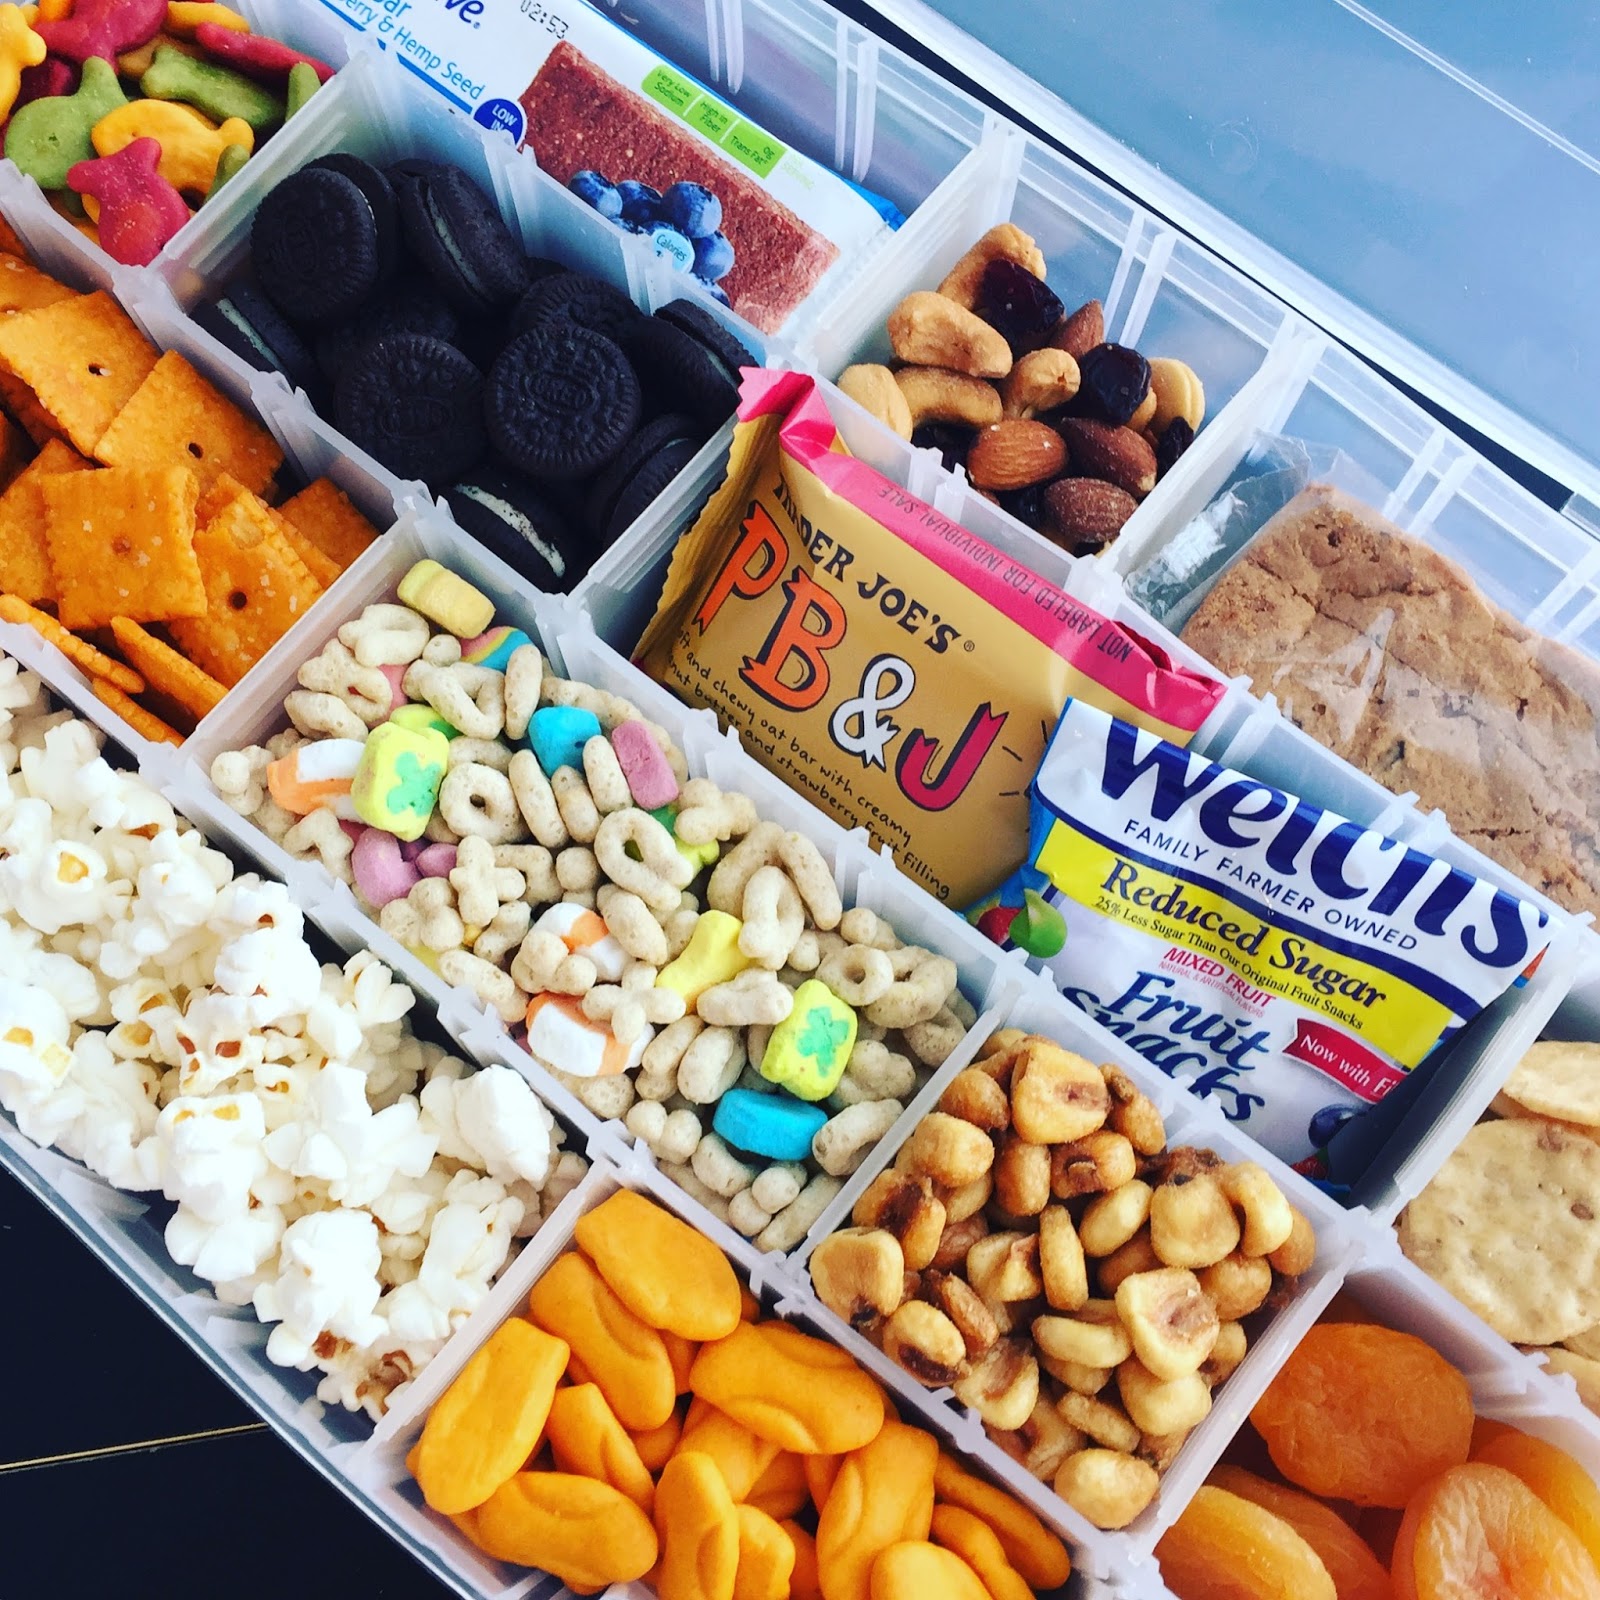 Kids Roadtrip Snack Box - Free to be Lea